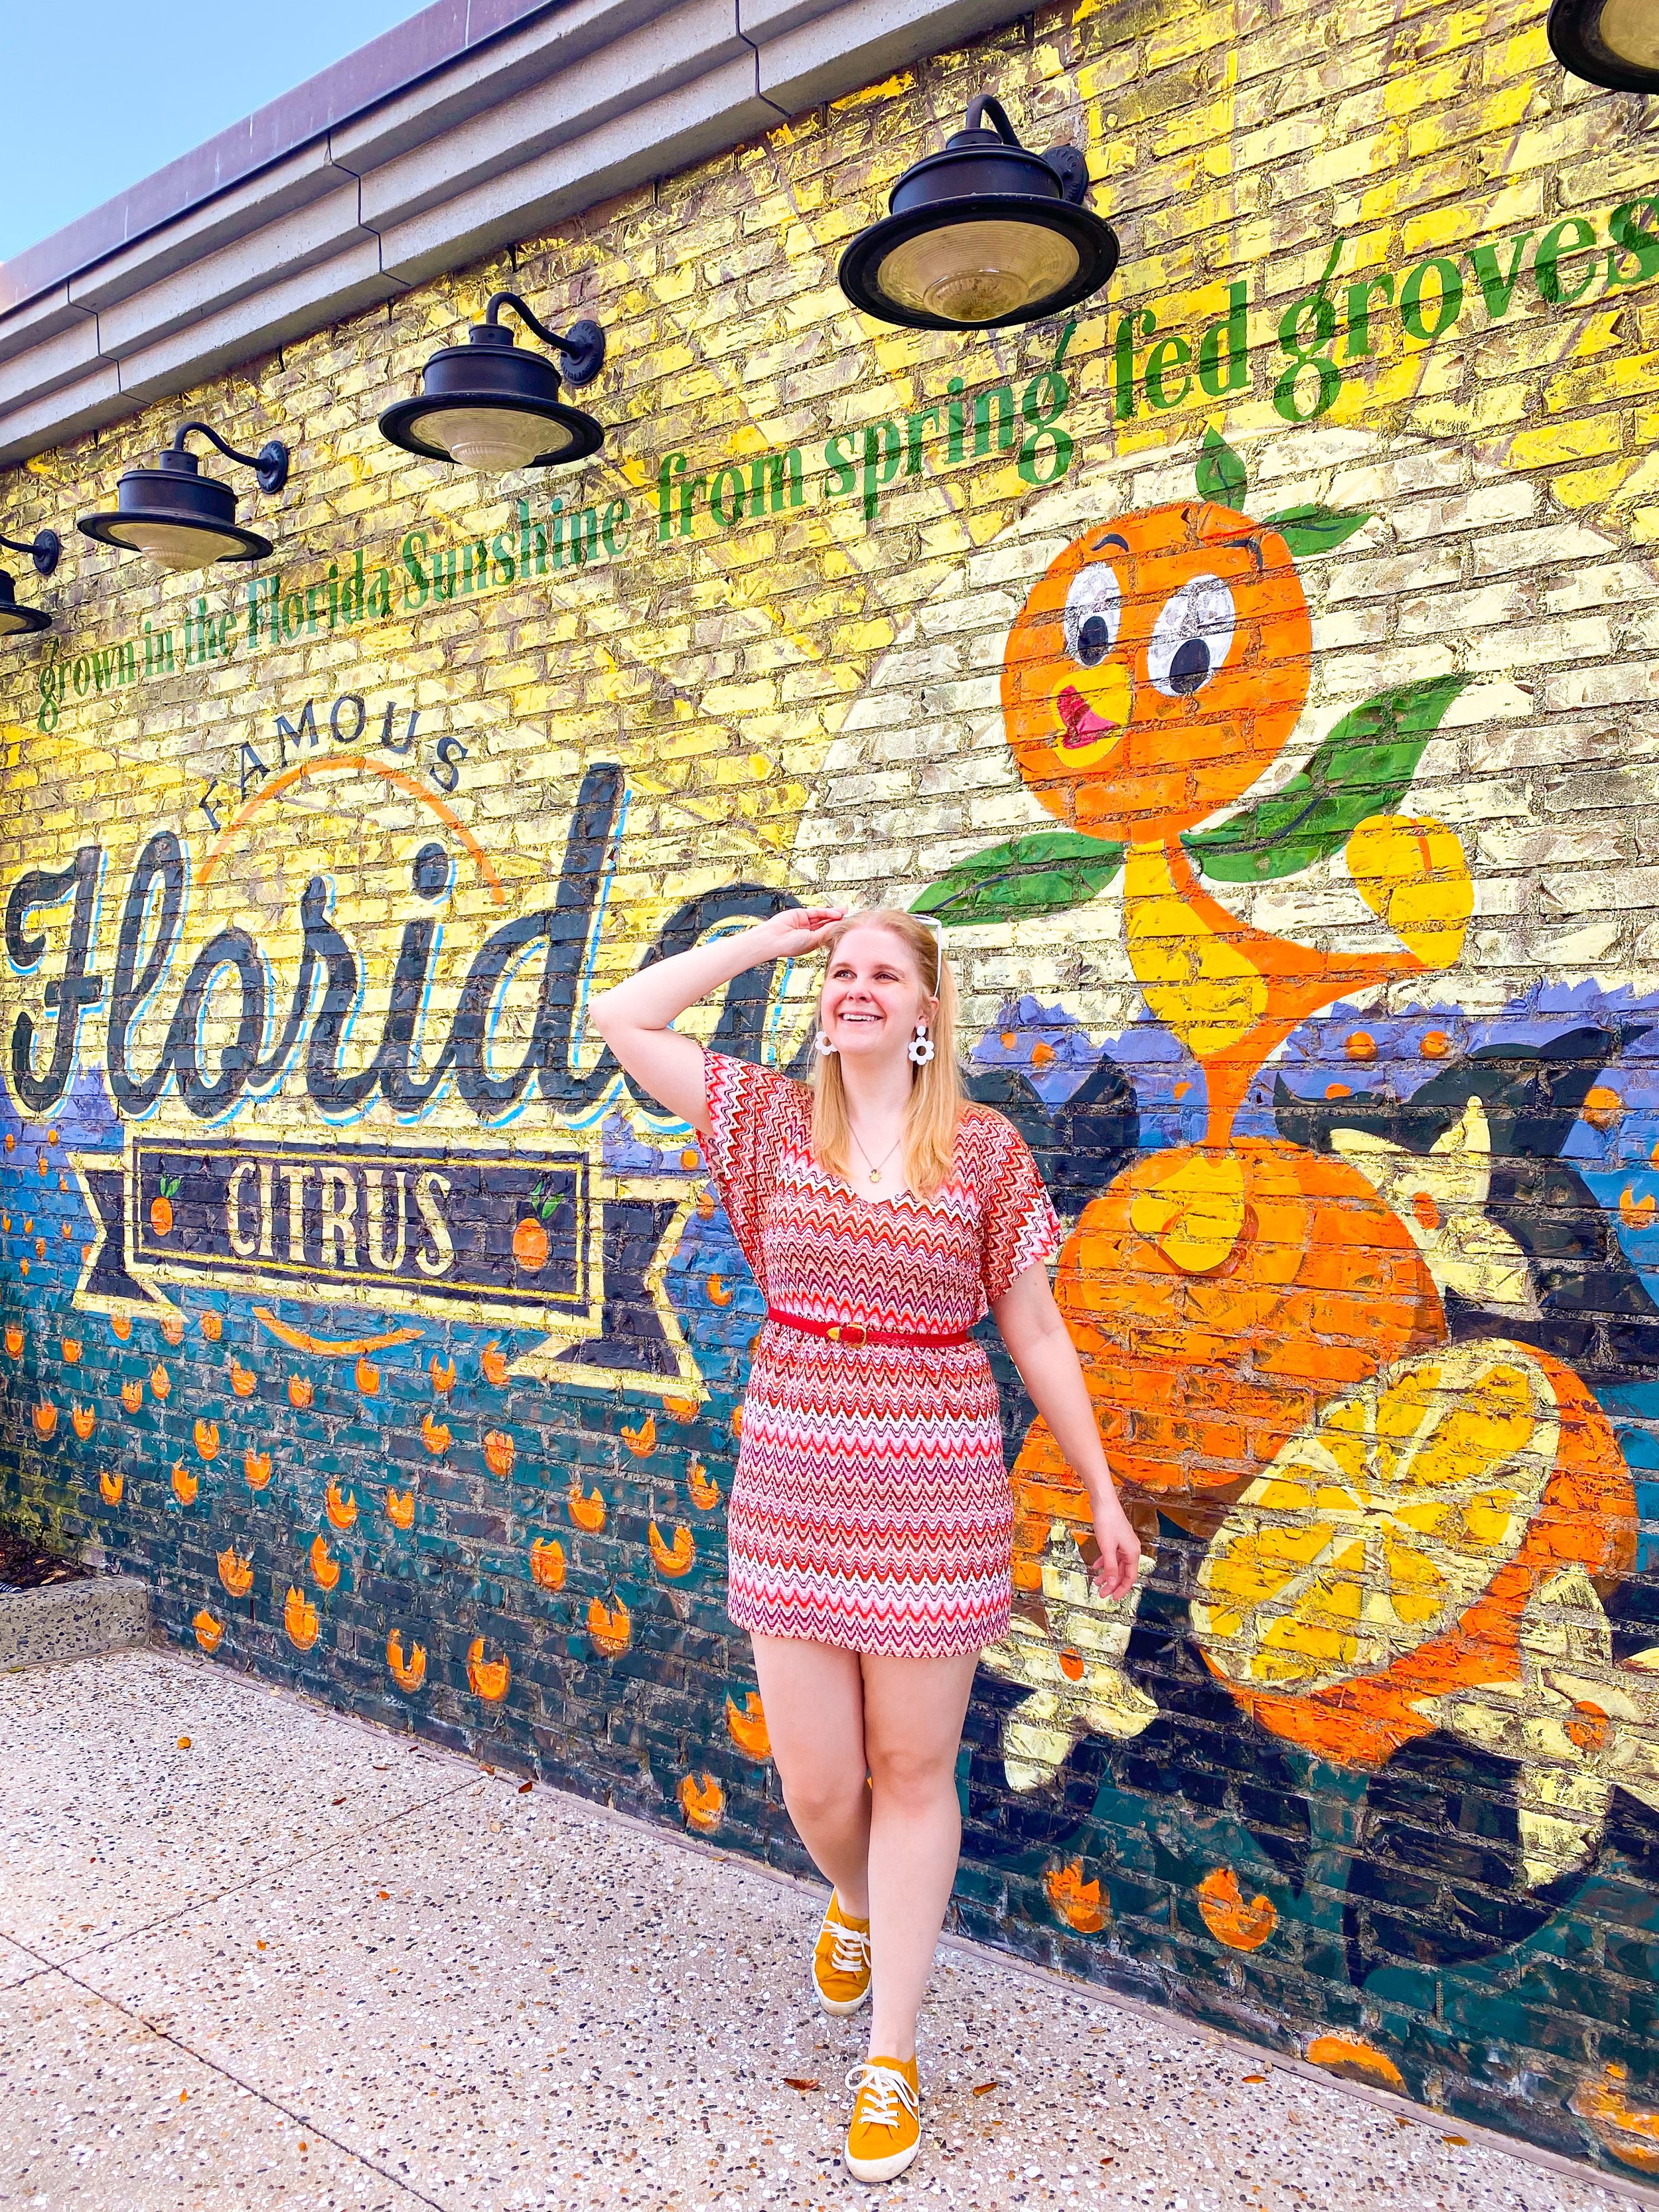 Disney Springs Orange Bird Mural Photoshoot